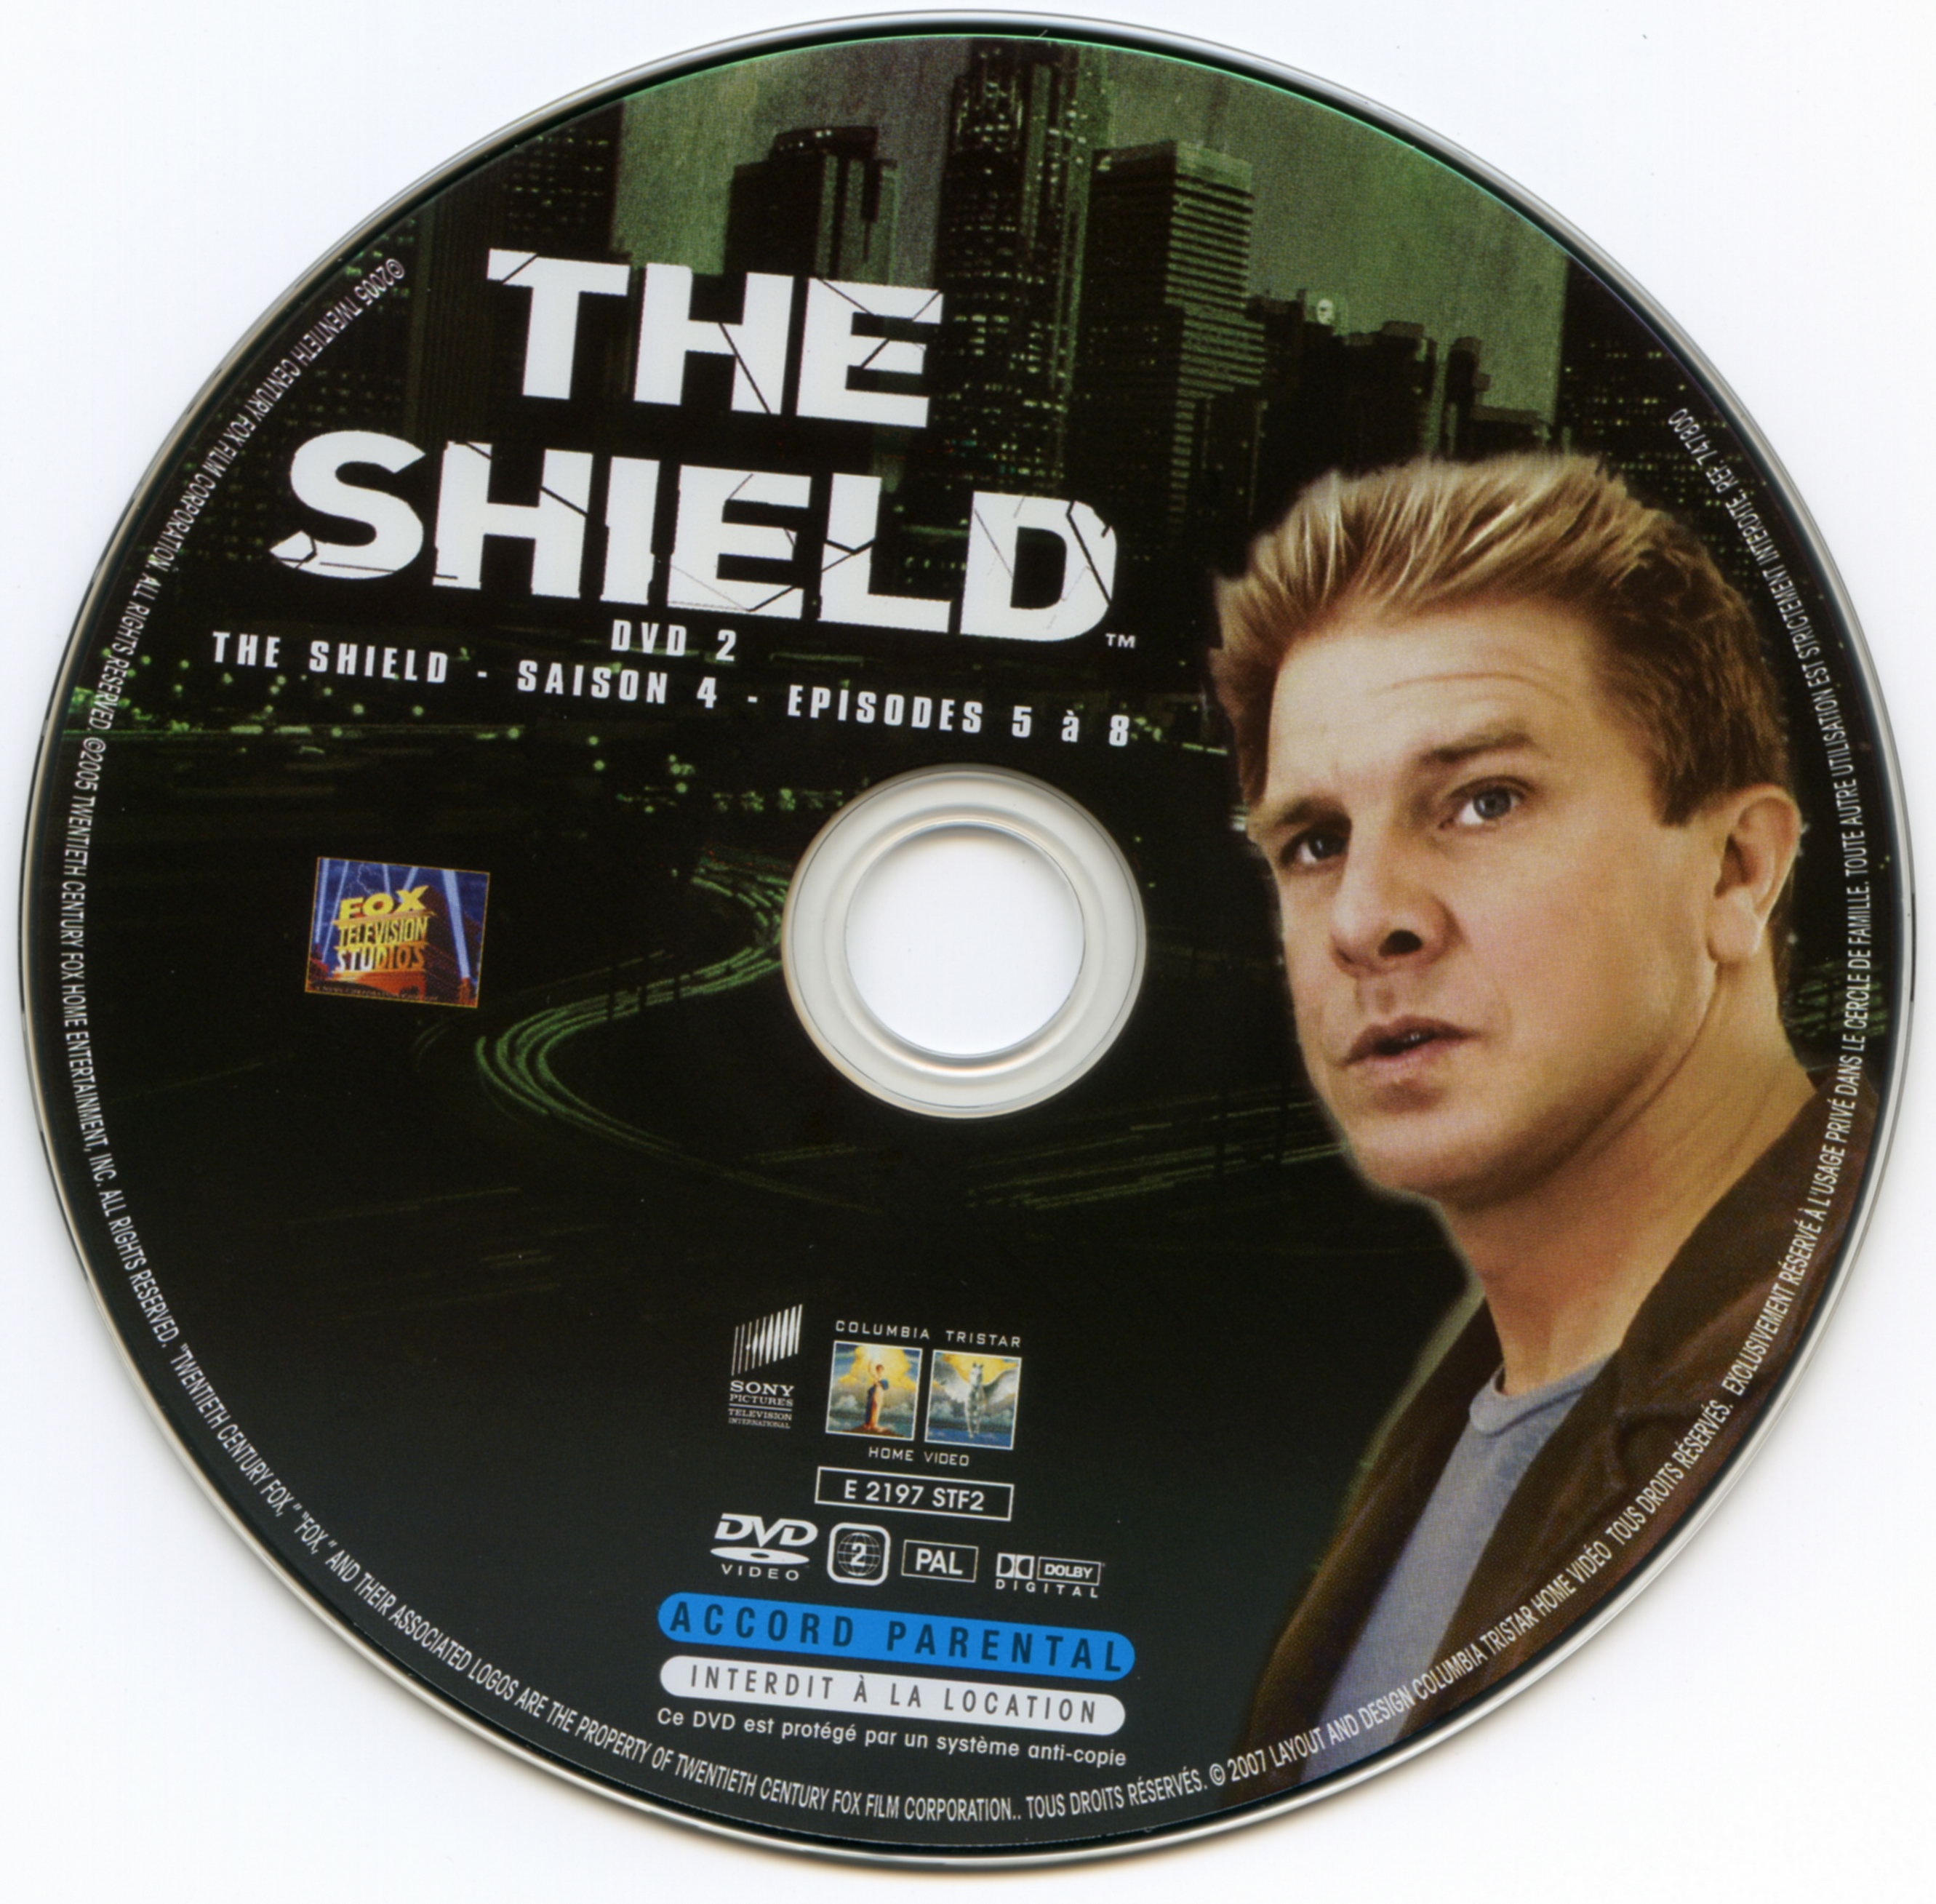 The shield saison 4 DVD 2